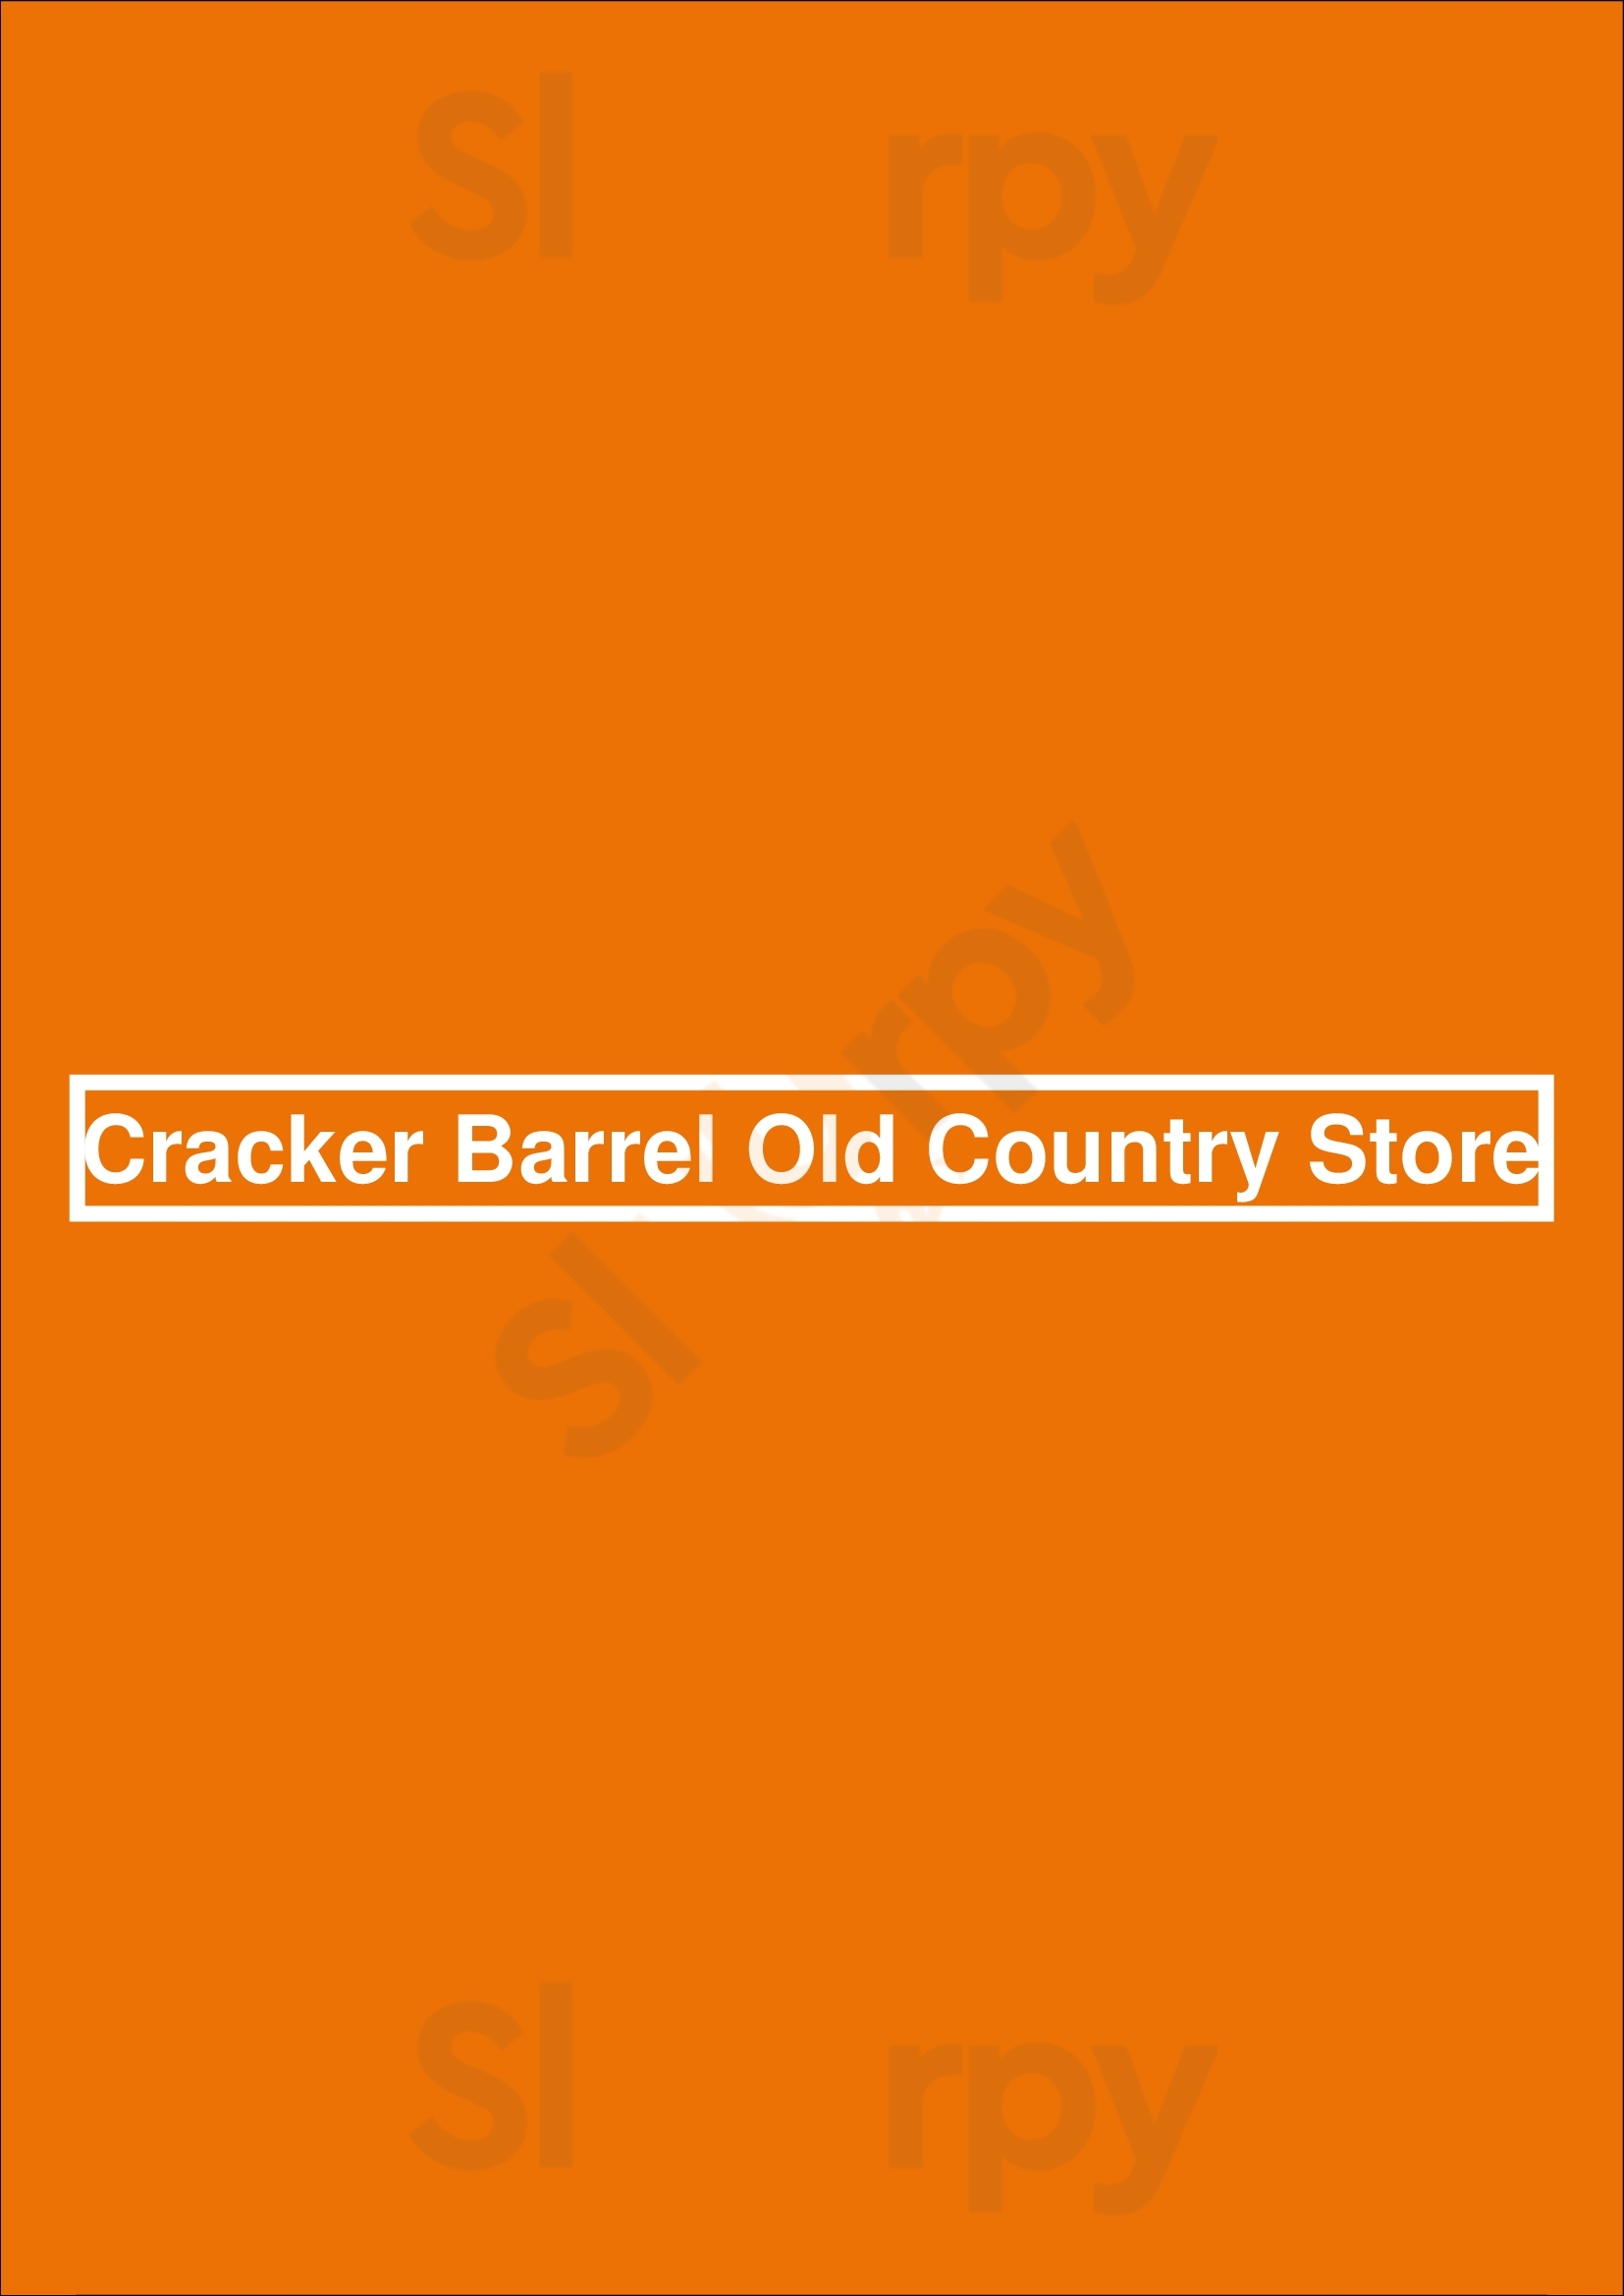 Cracker Barrel Old Country Store Melbourne Menu - 1